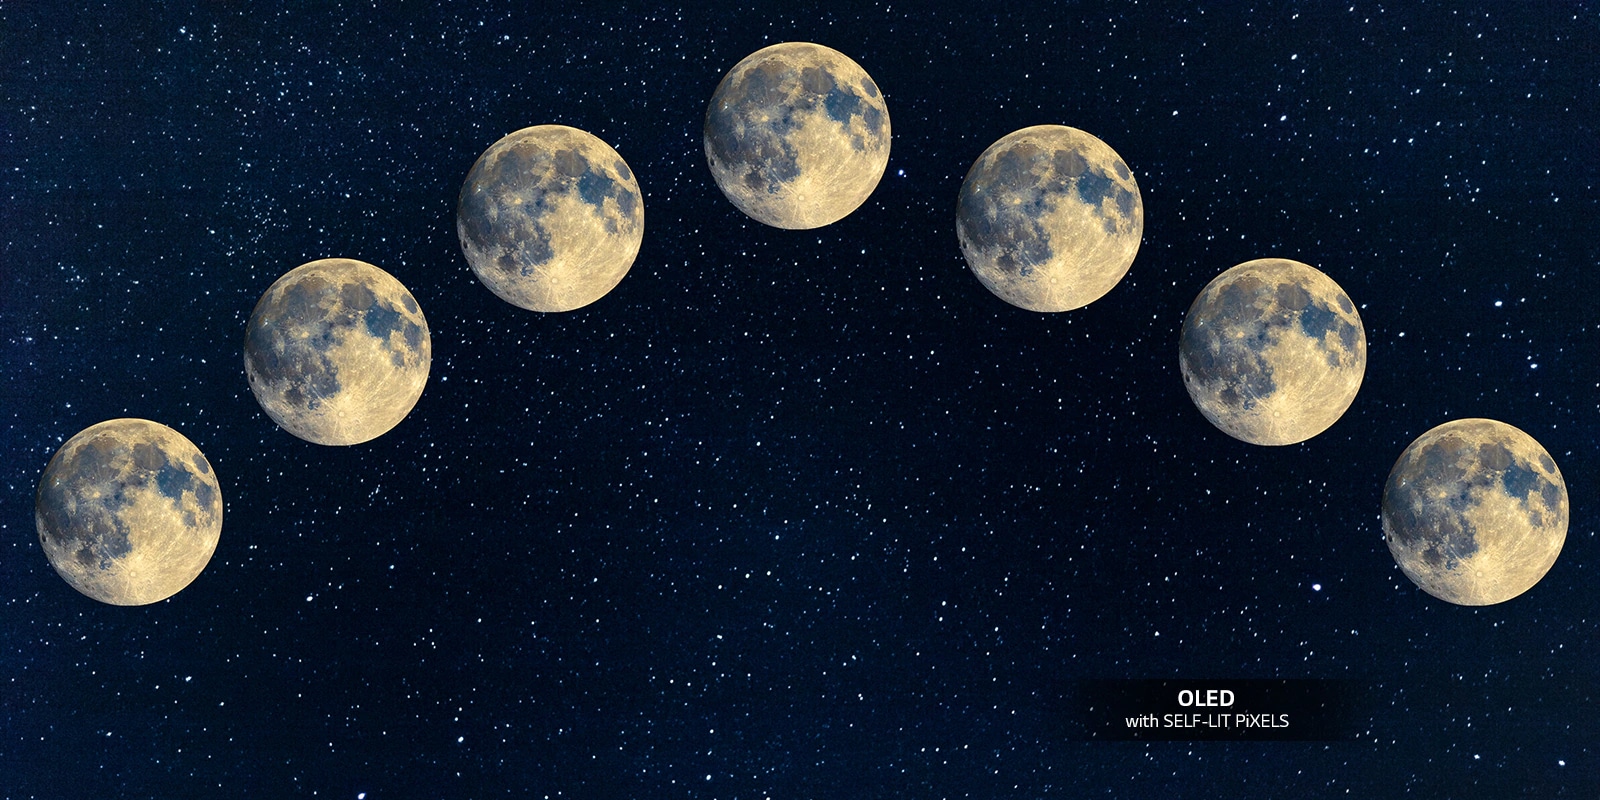 Image of seven full moon aligned across the night sky.